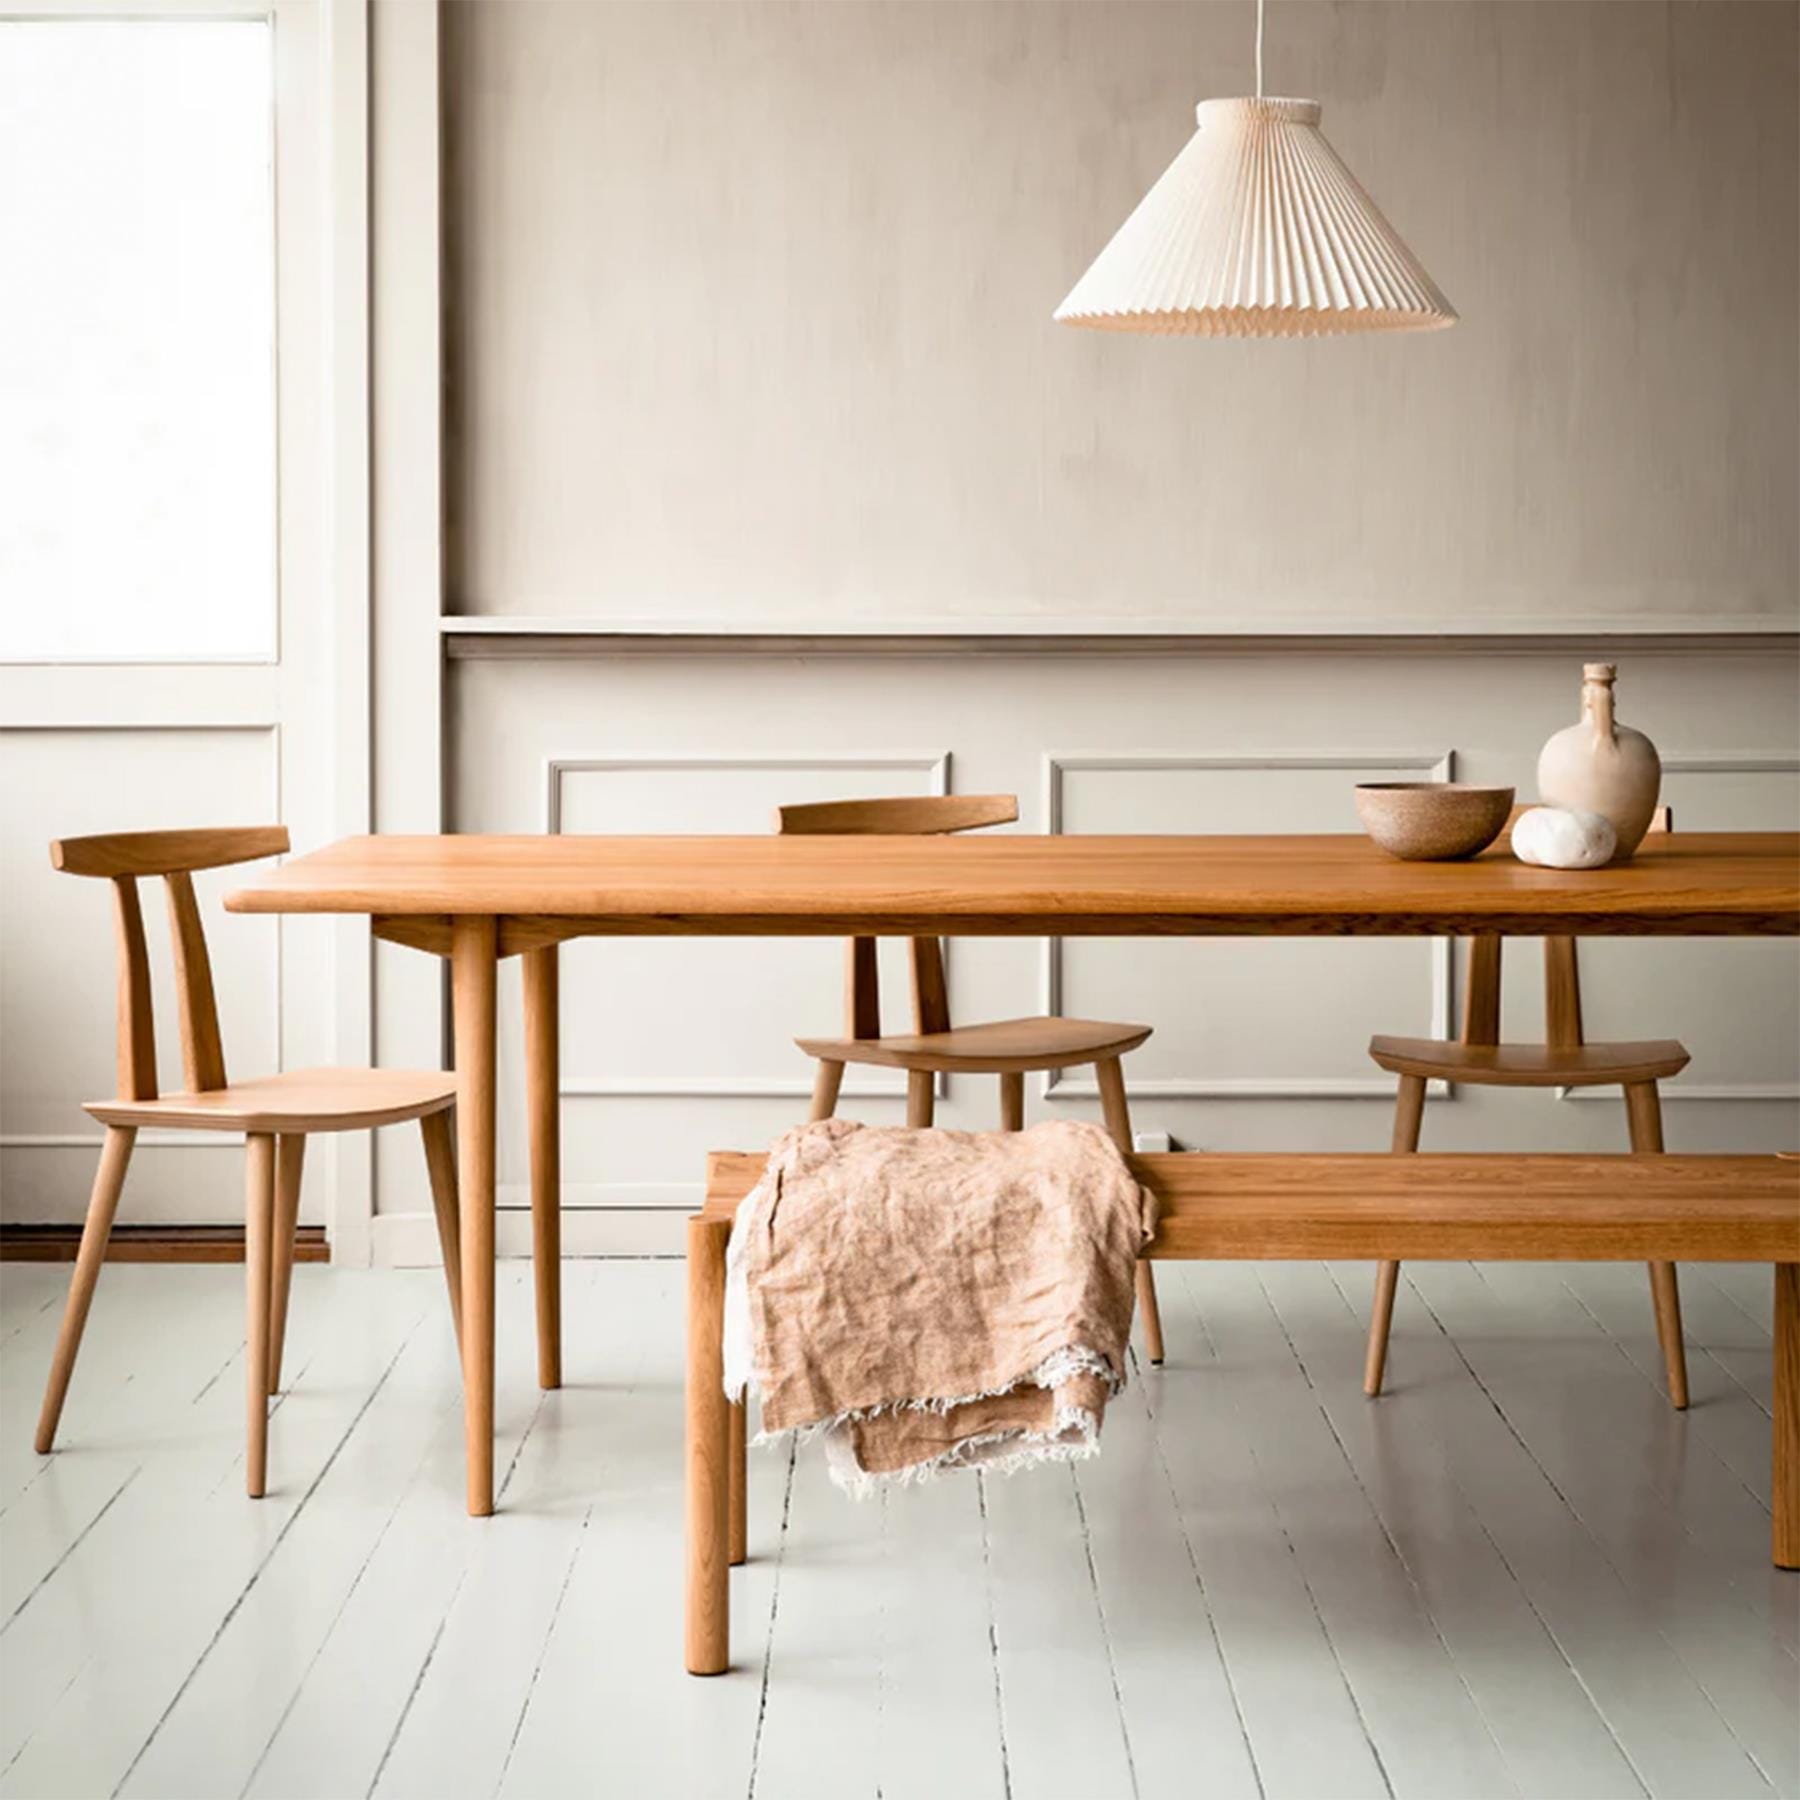 Make Nordic Holmen Rectangular Dining Table Large Natural Oak Length 260cm Width 112cm With 2 Extra Leaves Light Wood Designer Furniture From